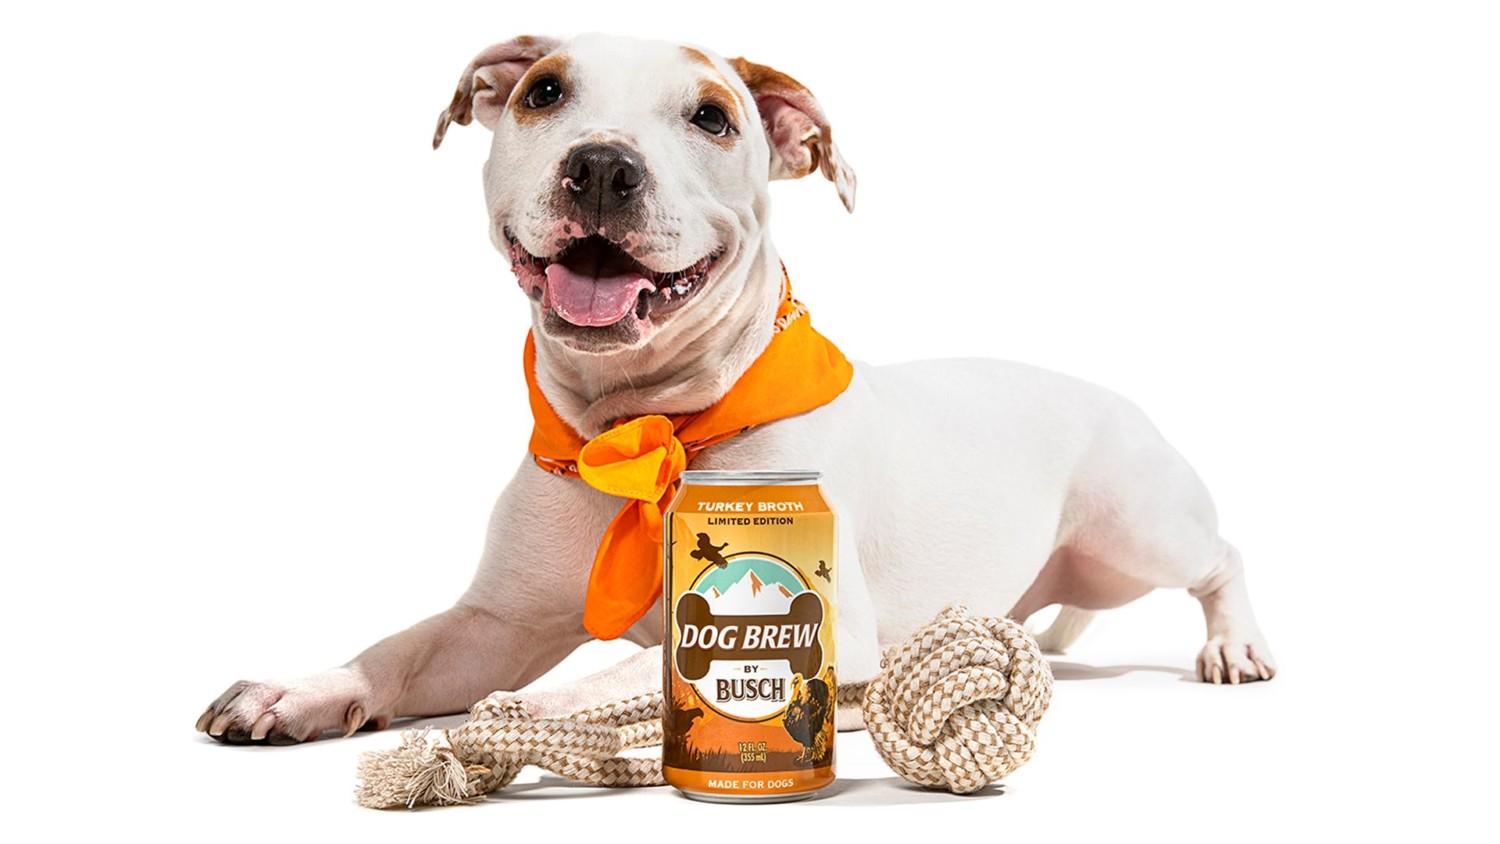 Kira the rescue dog with Busch Turkey Brew